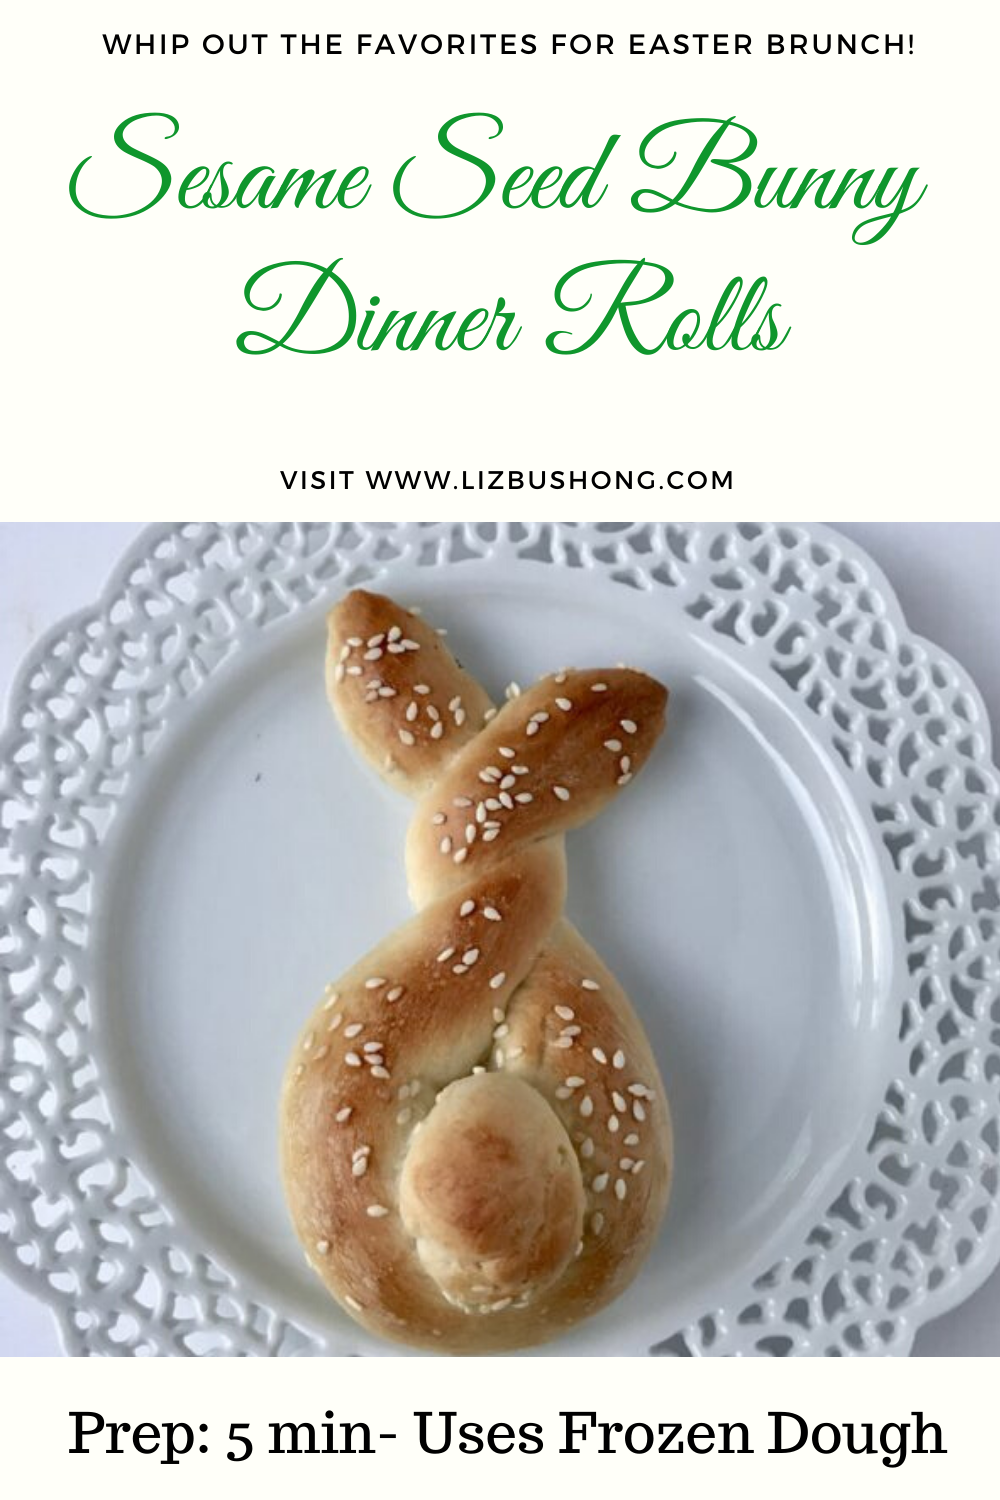 4 easy Recipes for Easter Brunch\bunny rolls lizbushong.com